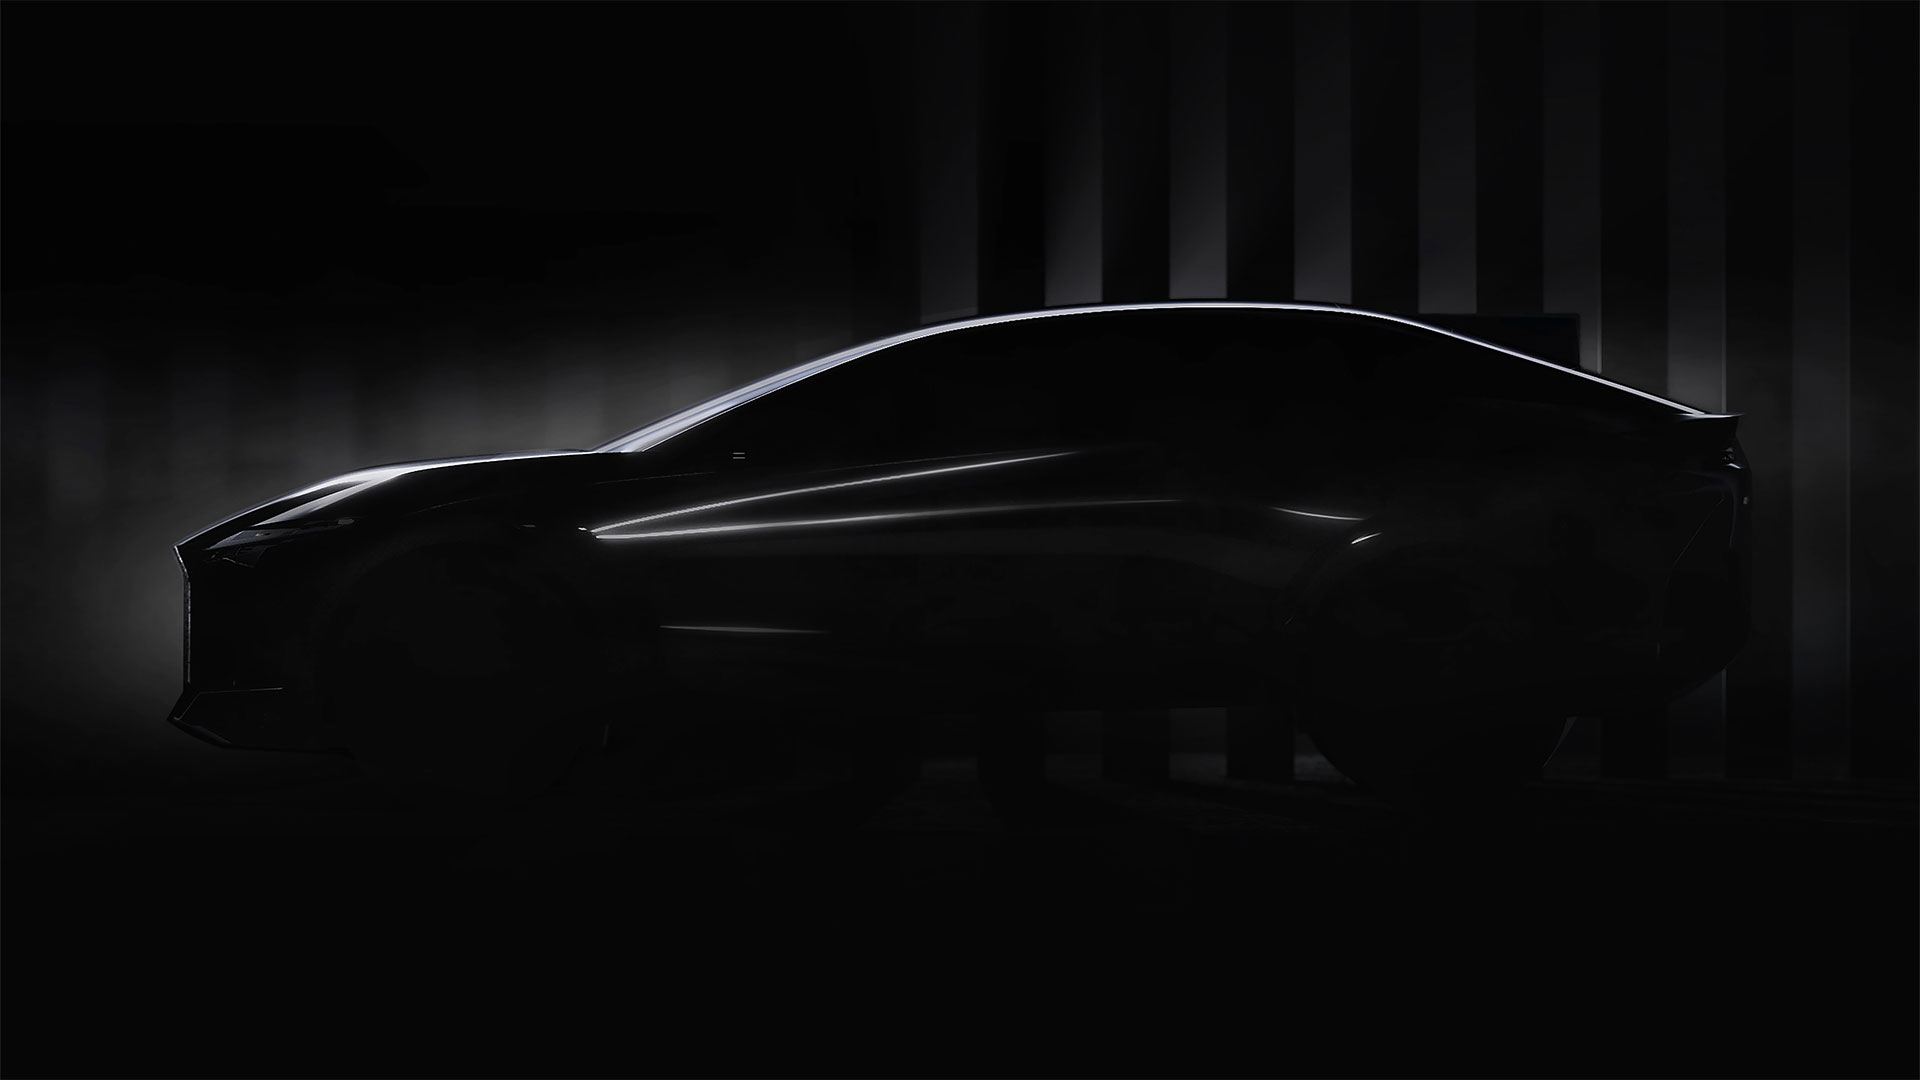 Lexus 2021 concept car